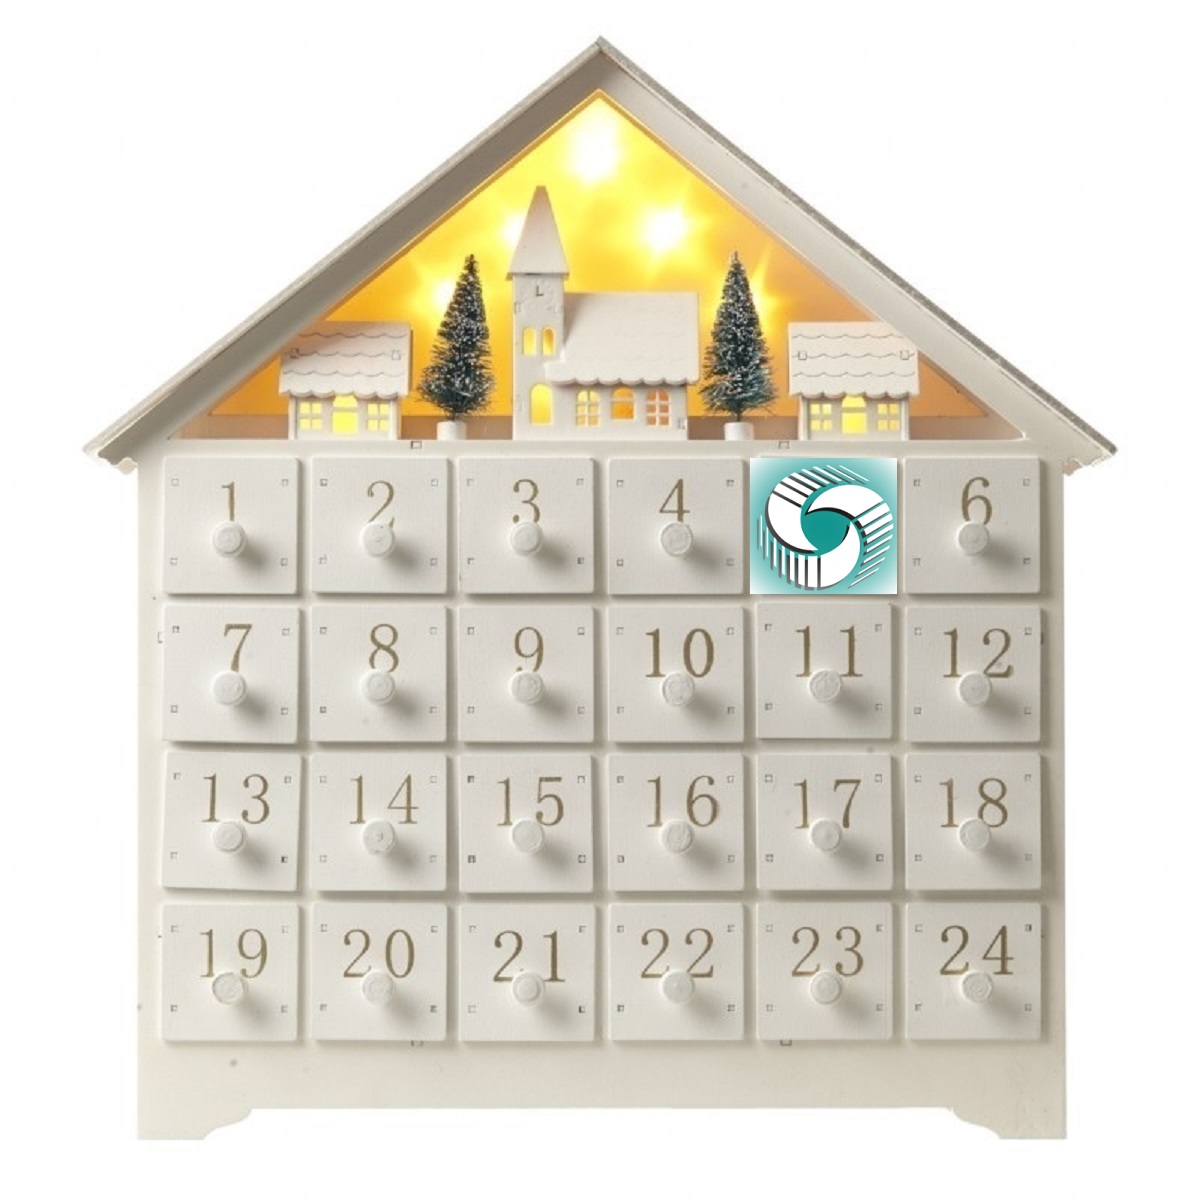 Day 5 – Frontier’s Advent Calendar